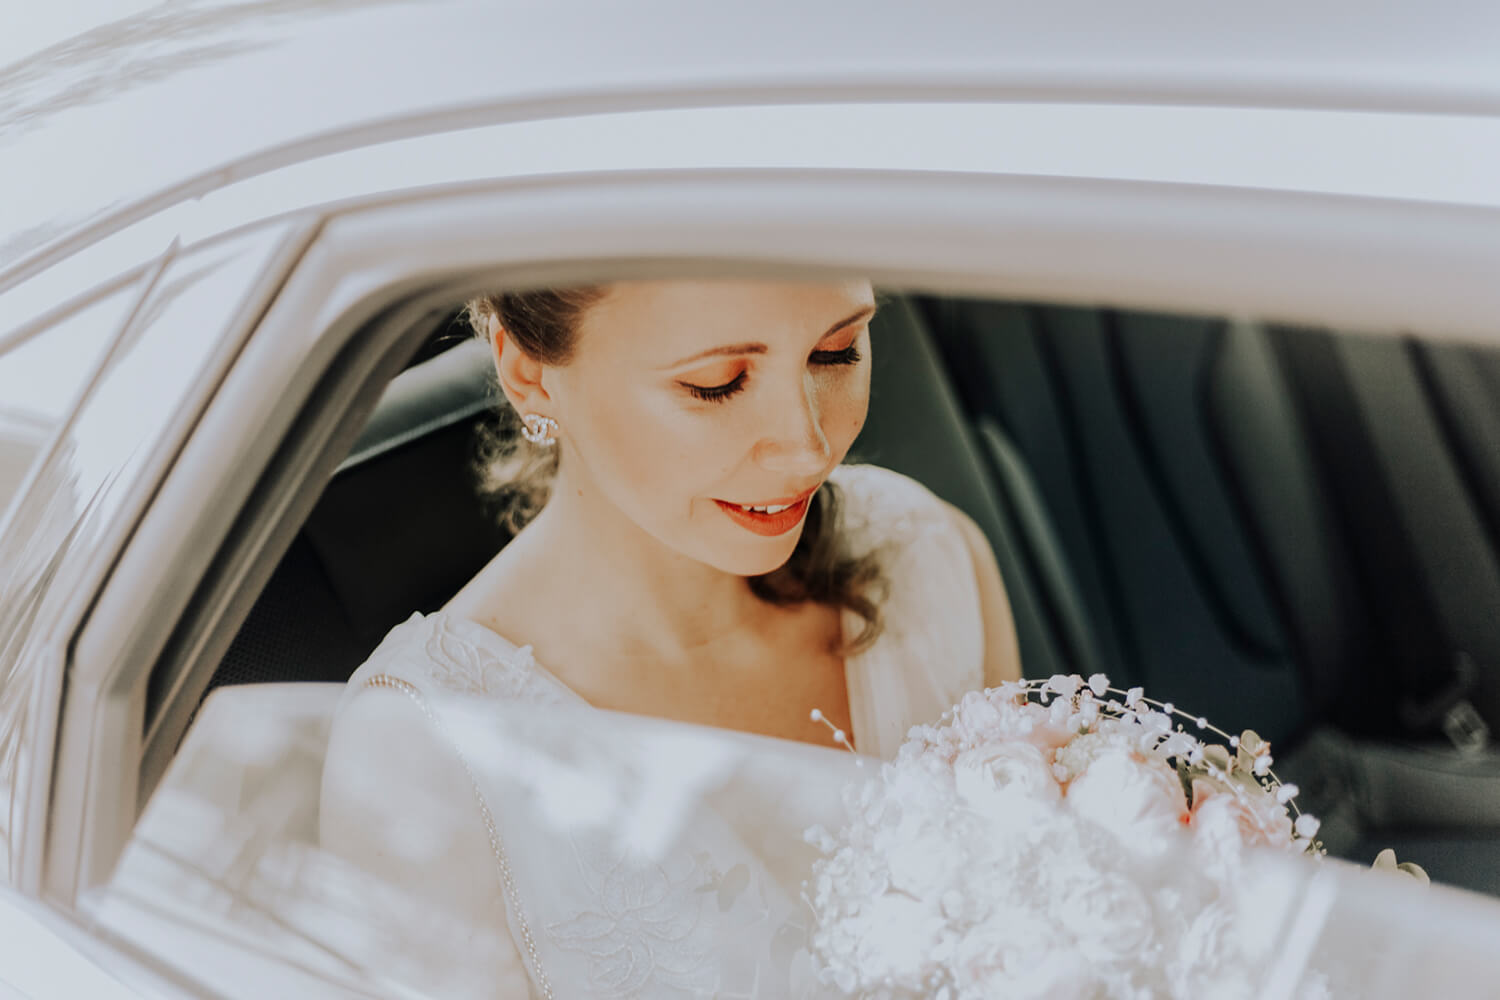 Wedding-Update-Our-First-Look-Weddingday-2018-Kationette-Bride-Fashionblogger-NRW